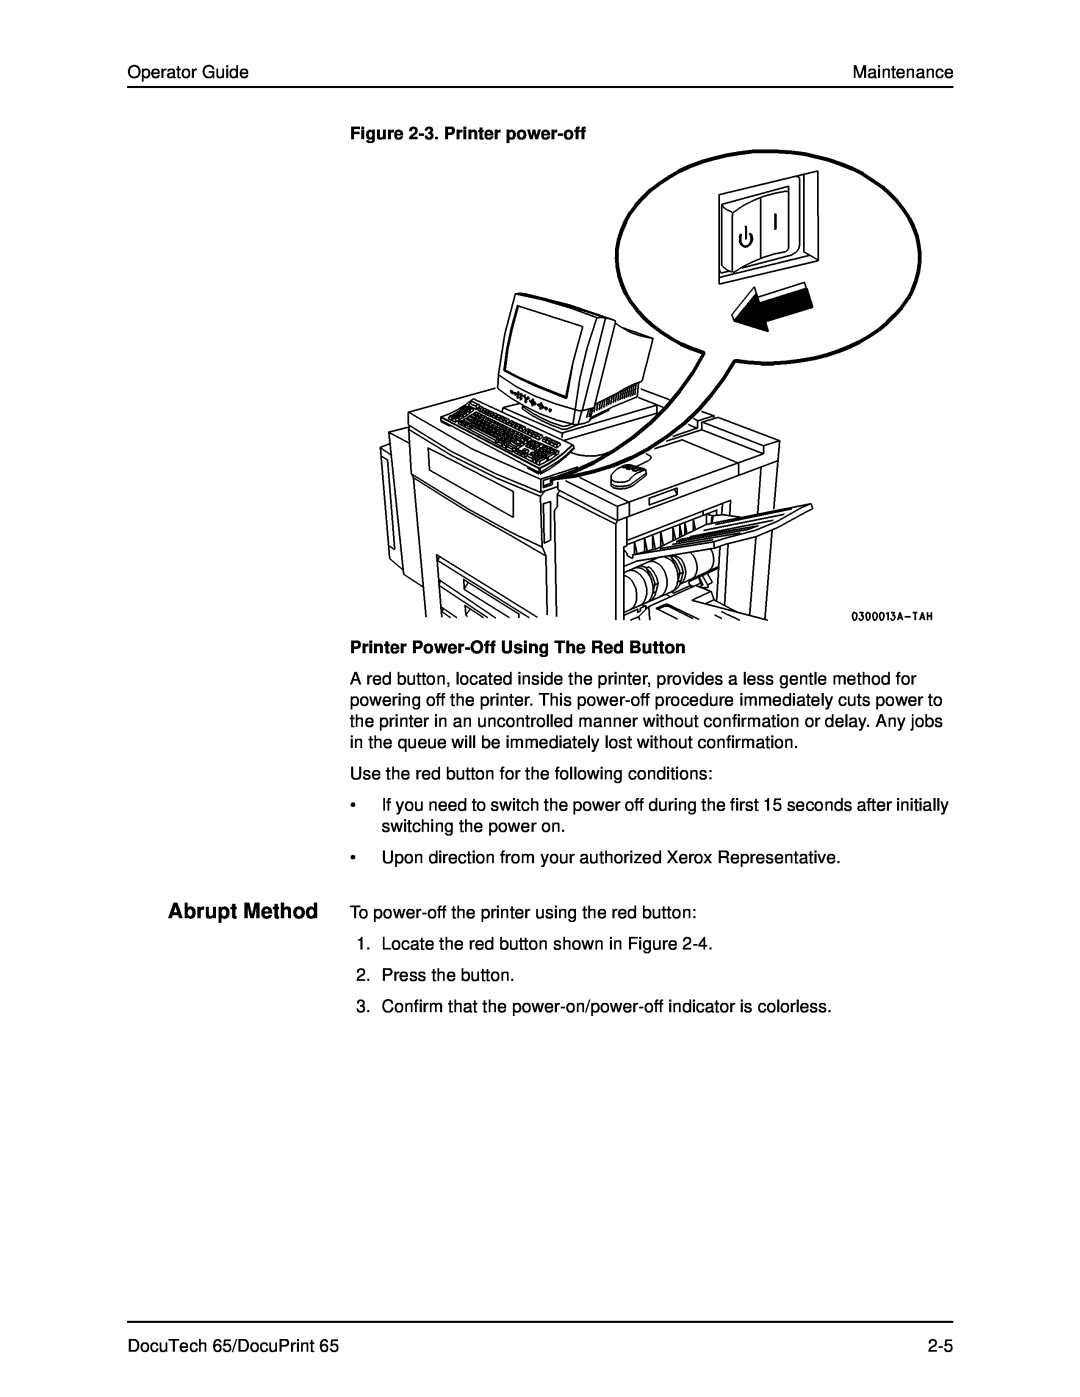 Xerox DOCUTECH 65 manual 3. Printer power-off Printer Power-Off Using The Red Button 